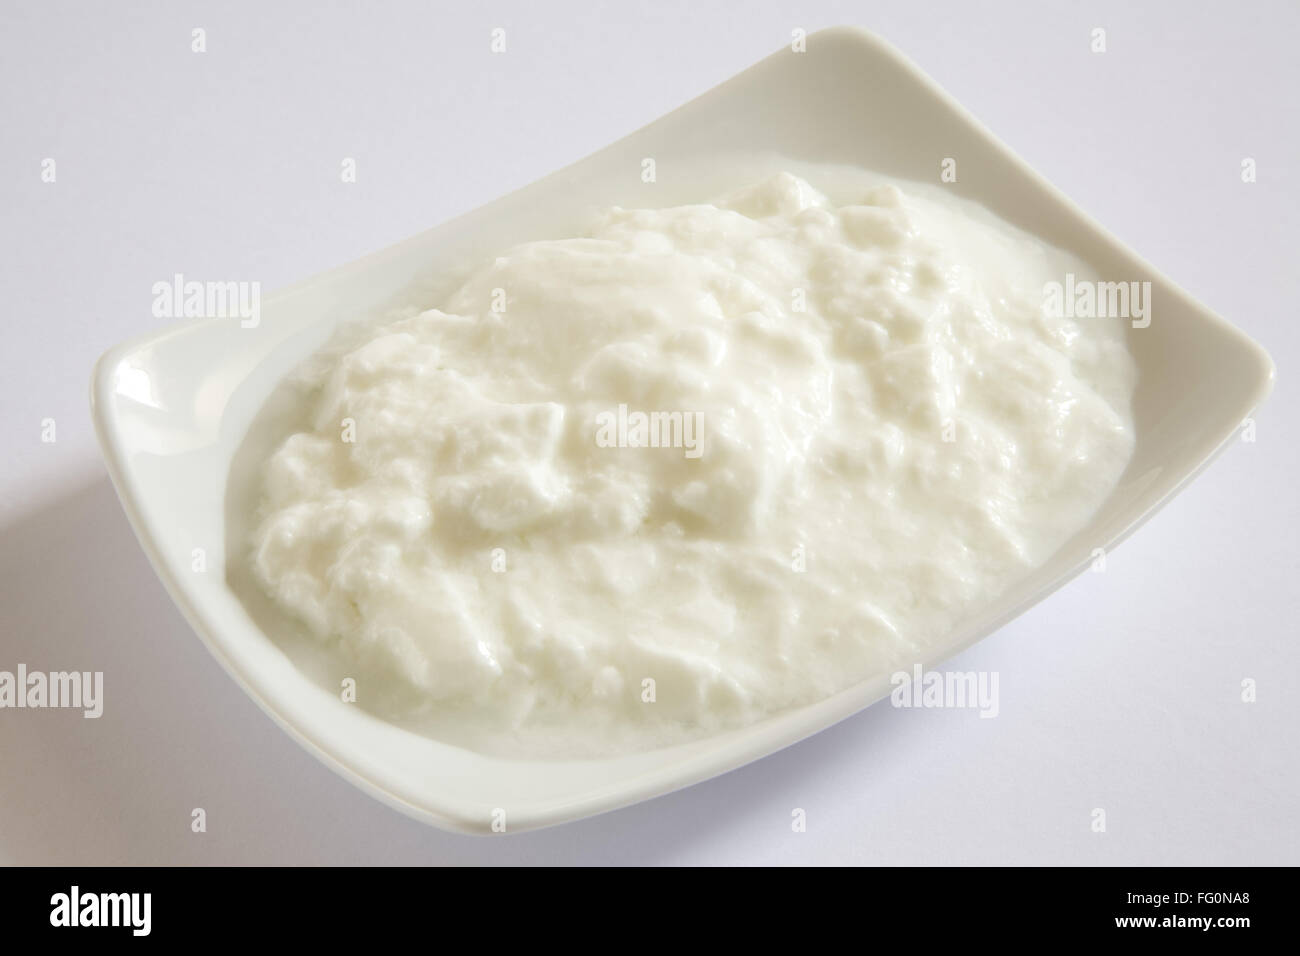 Curd yogurt dahi home or dairy product Stock Photo